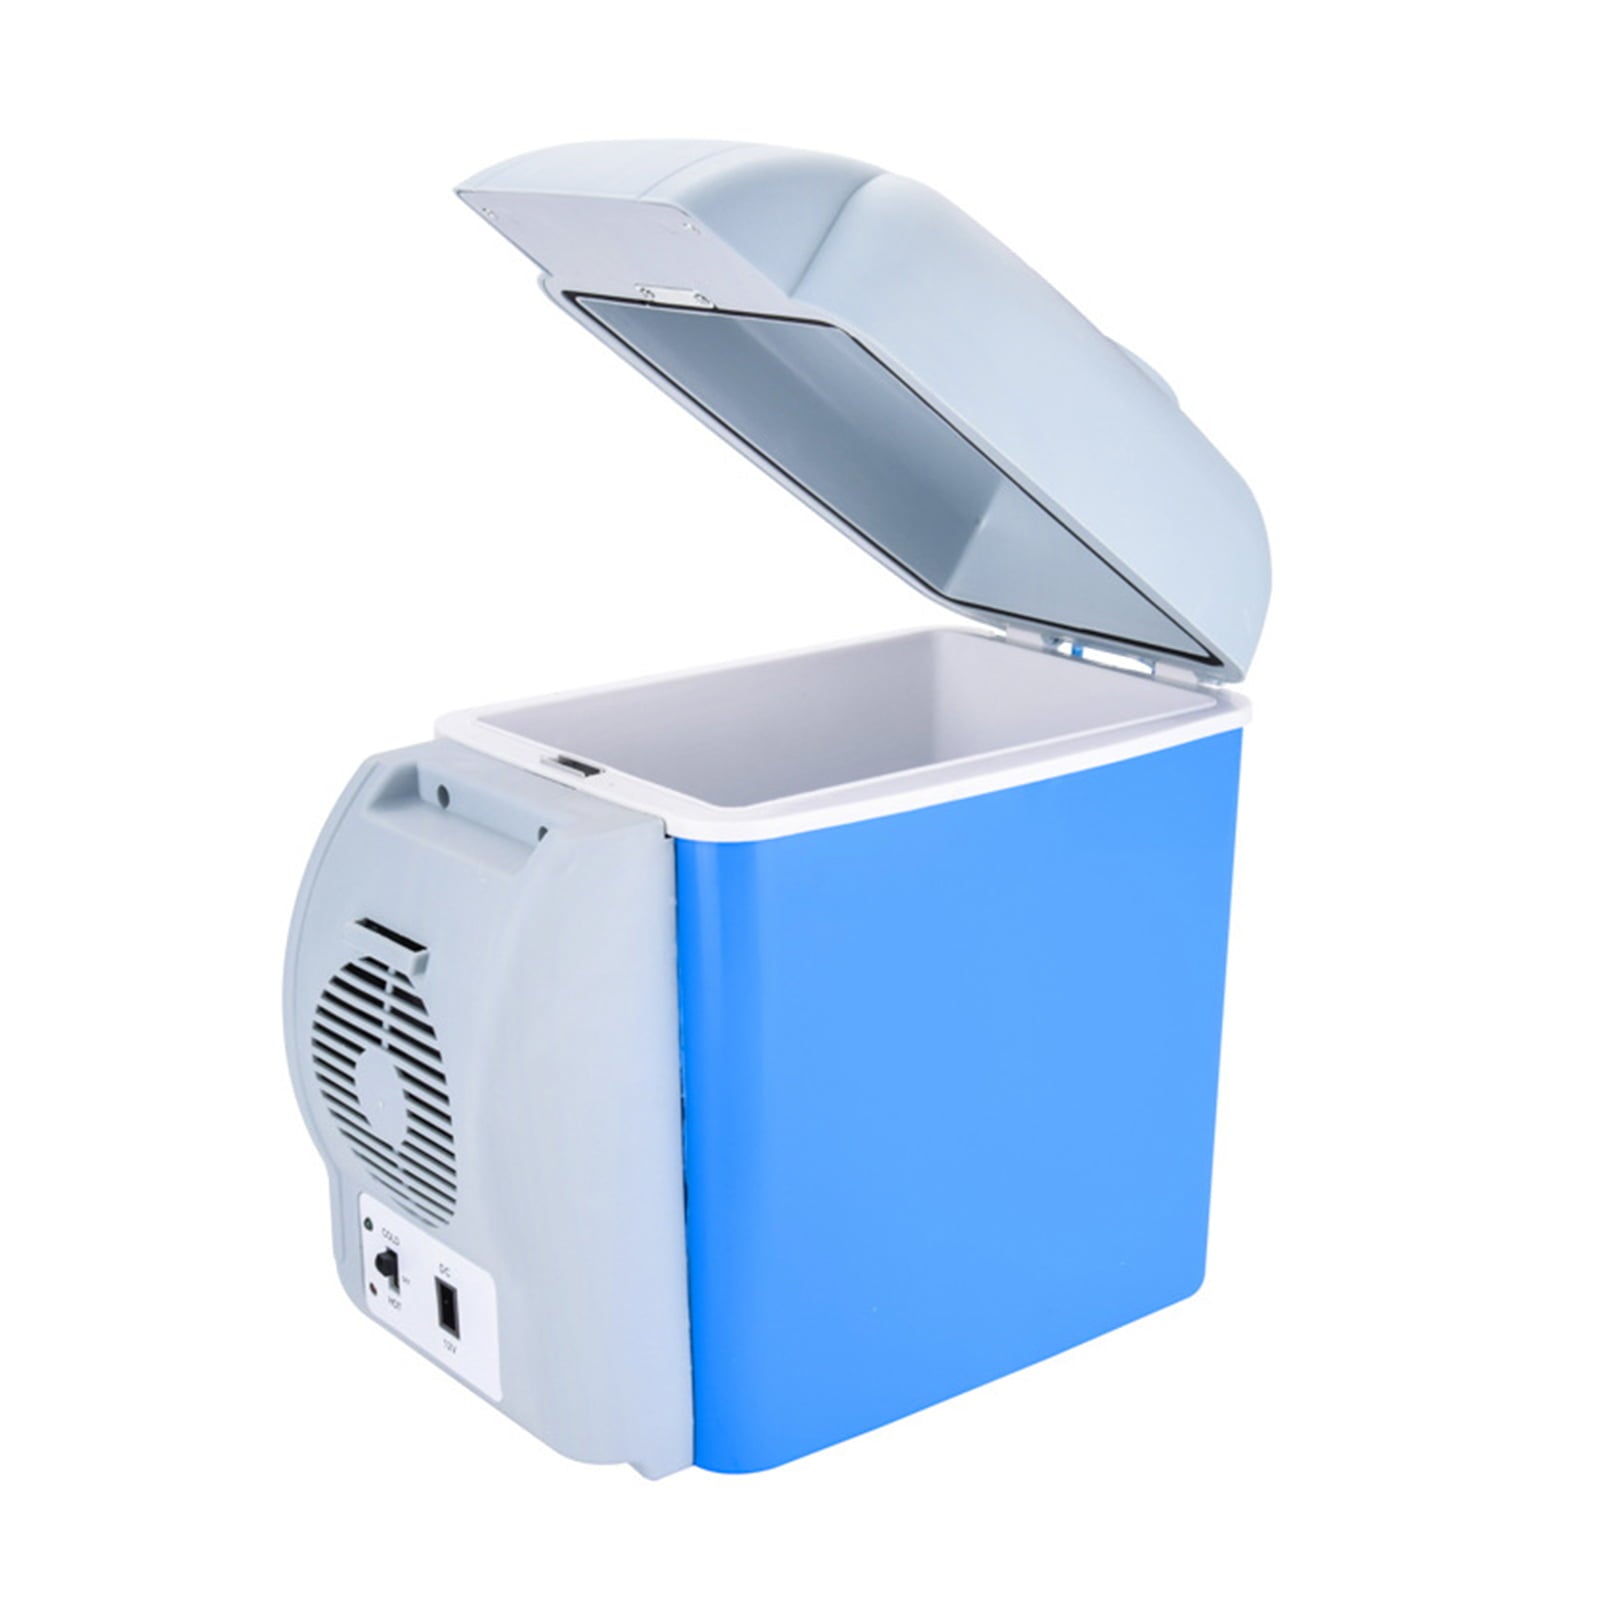 Docooler Car Refrigerator 7.5L  Portable Car Fridge & Warmer for Road Trip Travel Camping Fishing